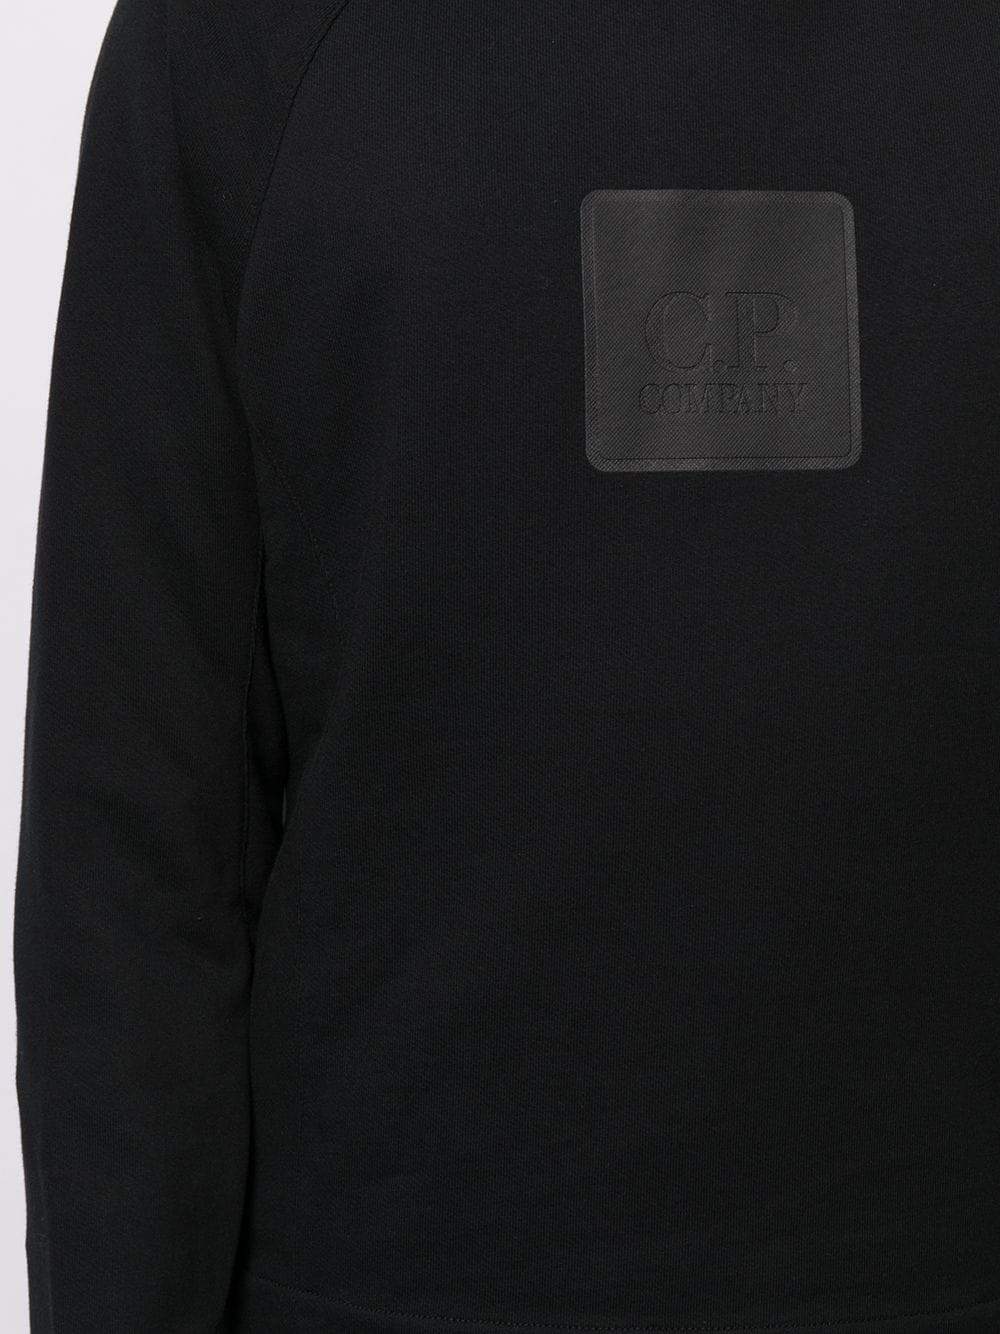 C.P. COMPANY Rubber Logo Sweatshirt Black - MAISONDEFASHION.COM